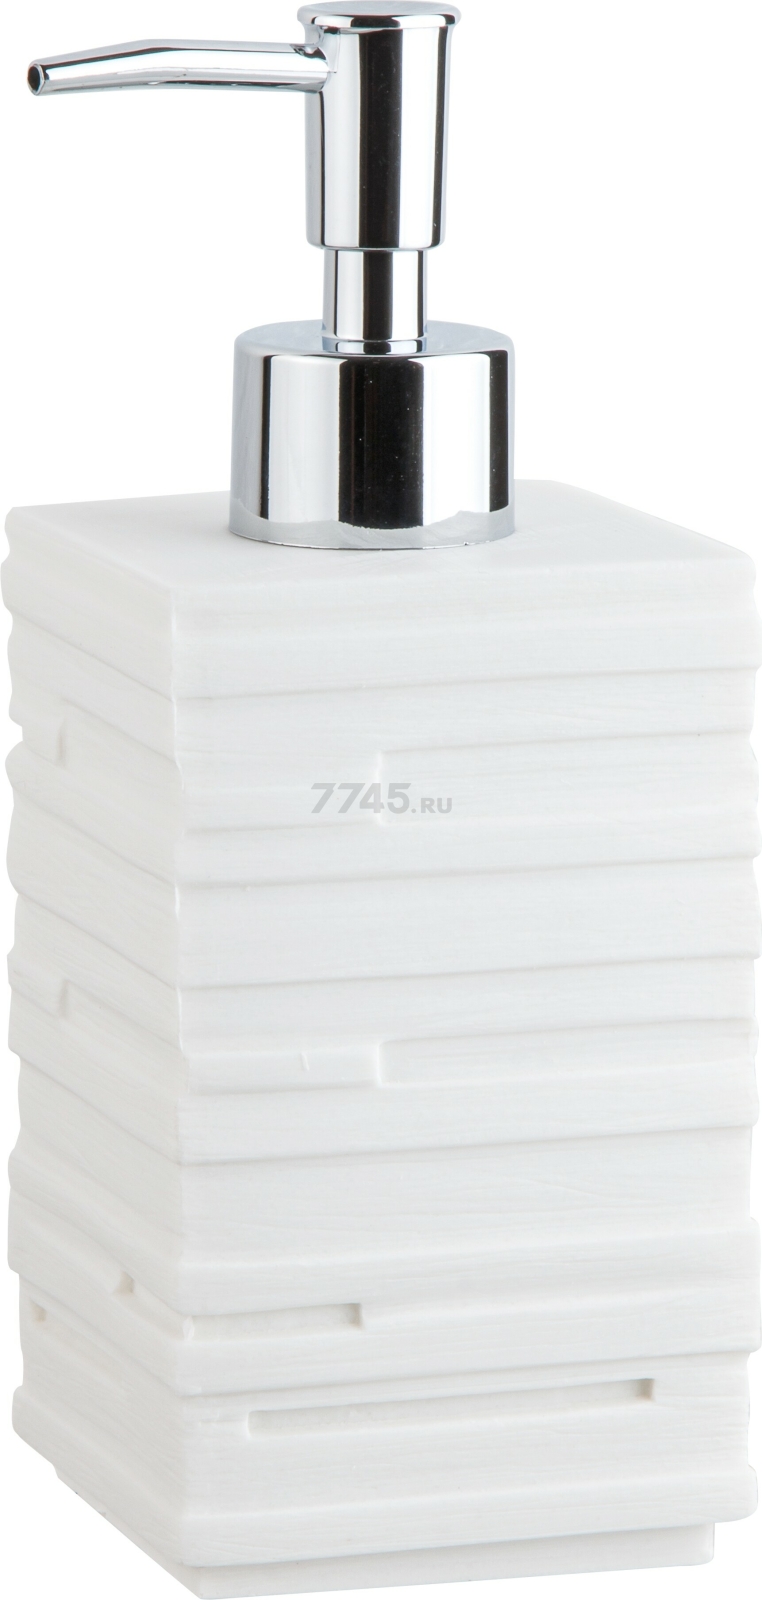 Дозатор для жидкого мыла PERFECTO LINEA Weathered Sand белый (35-151103)